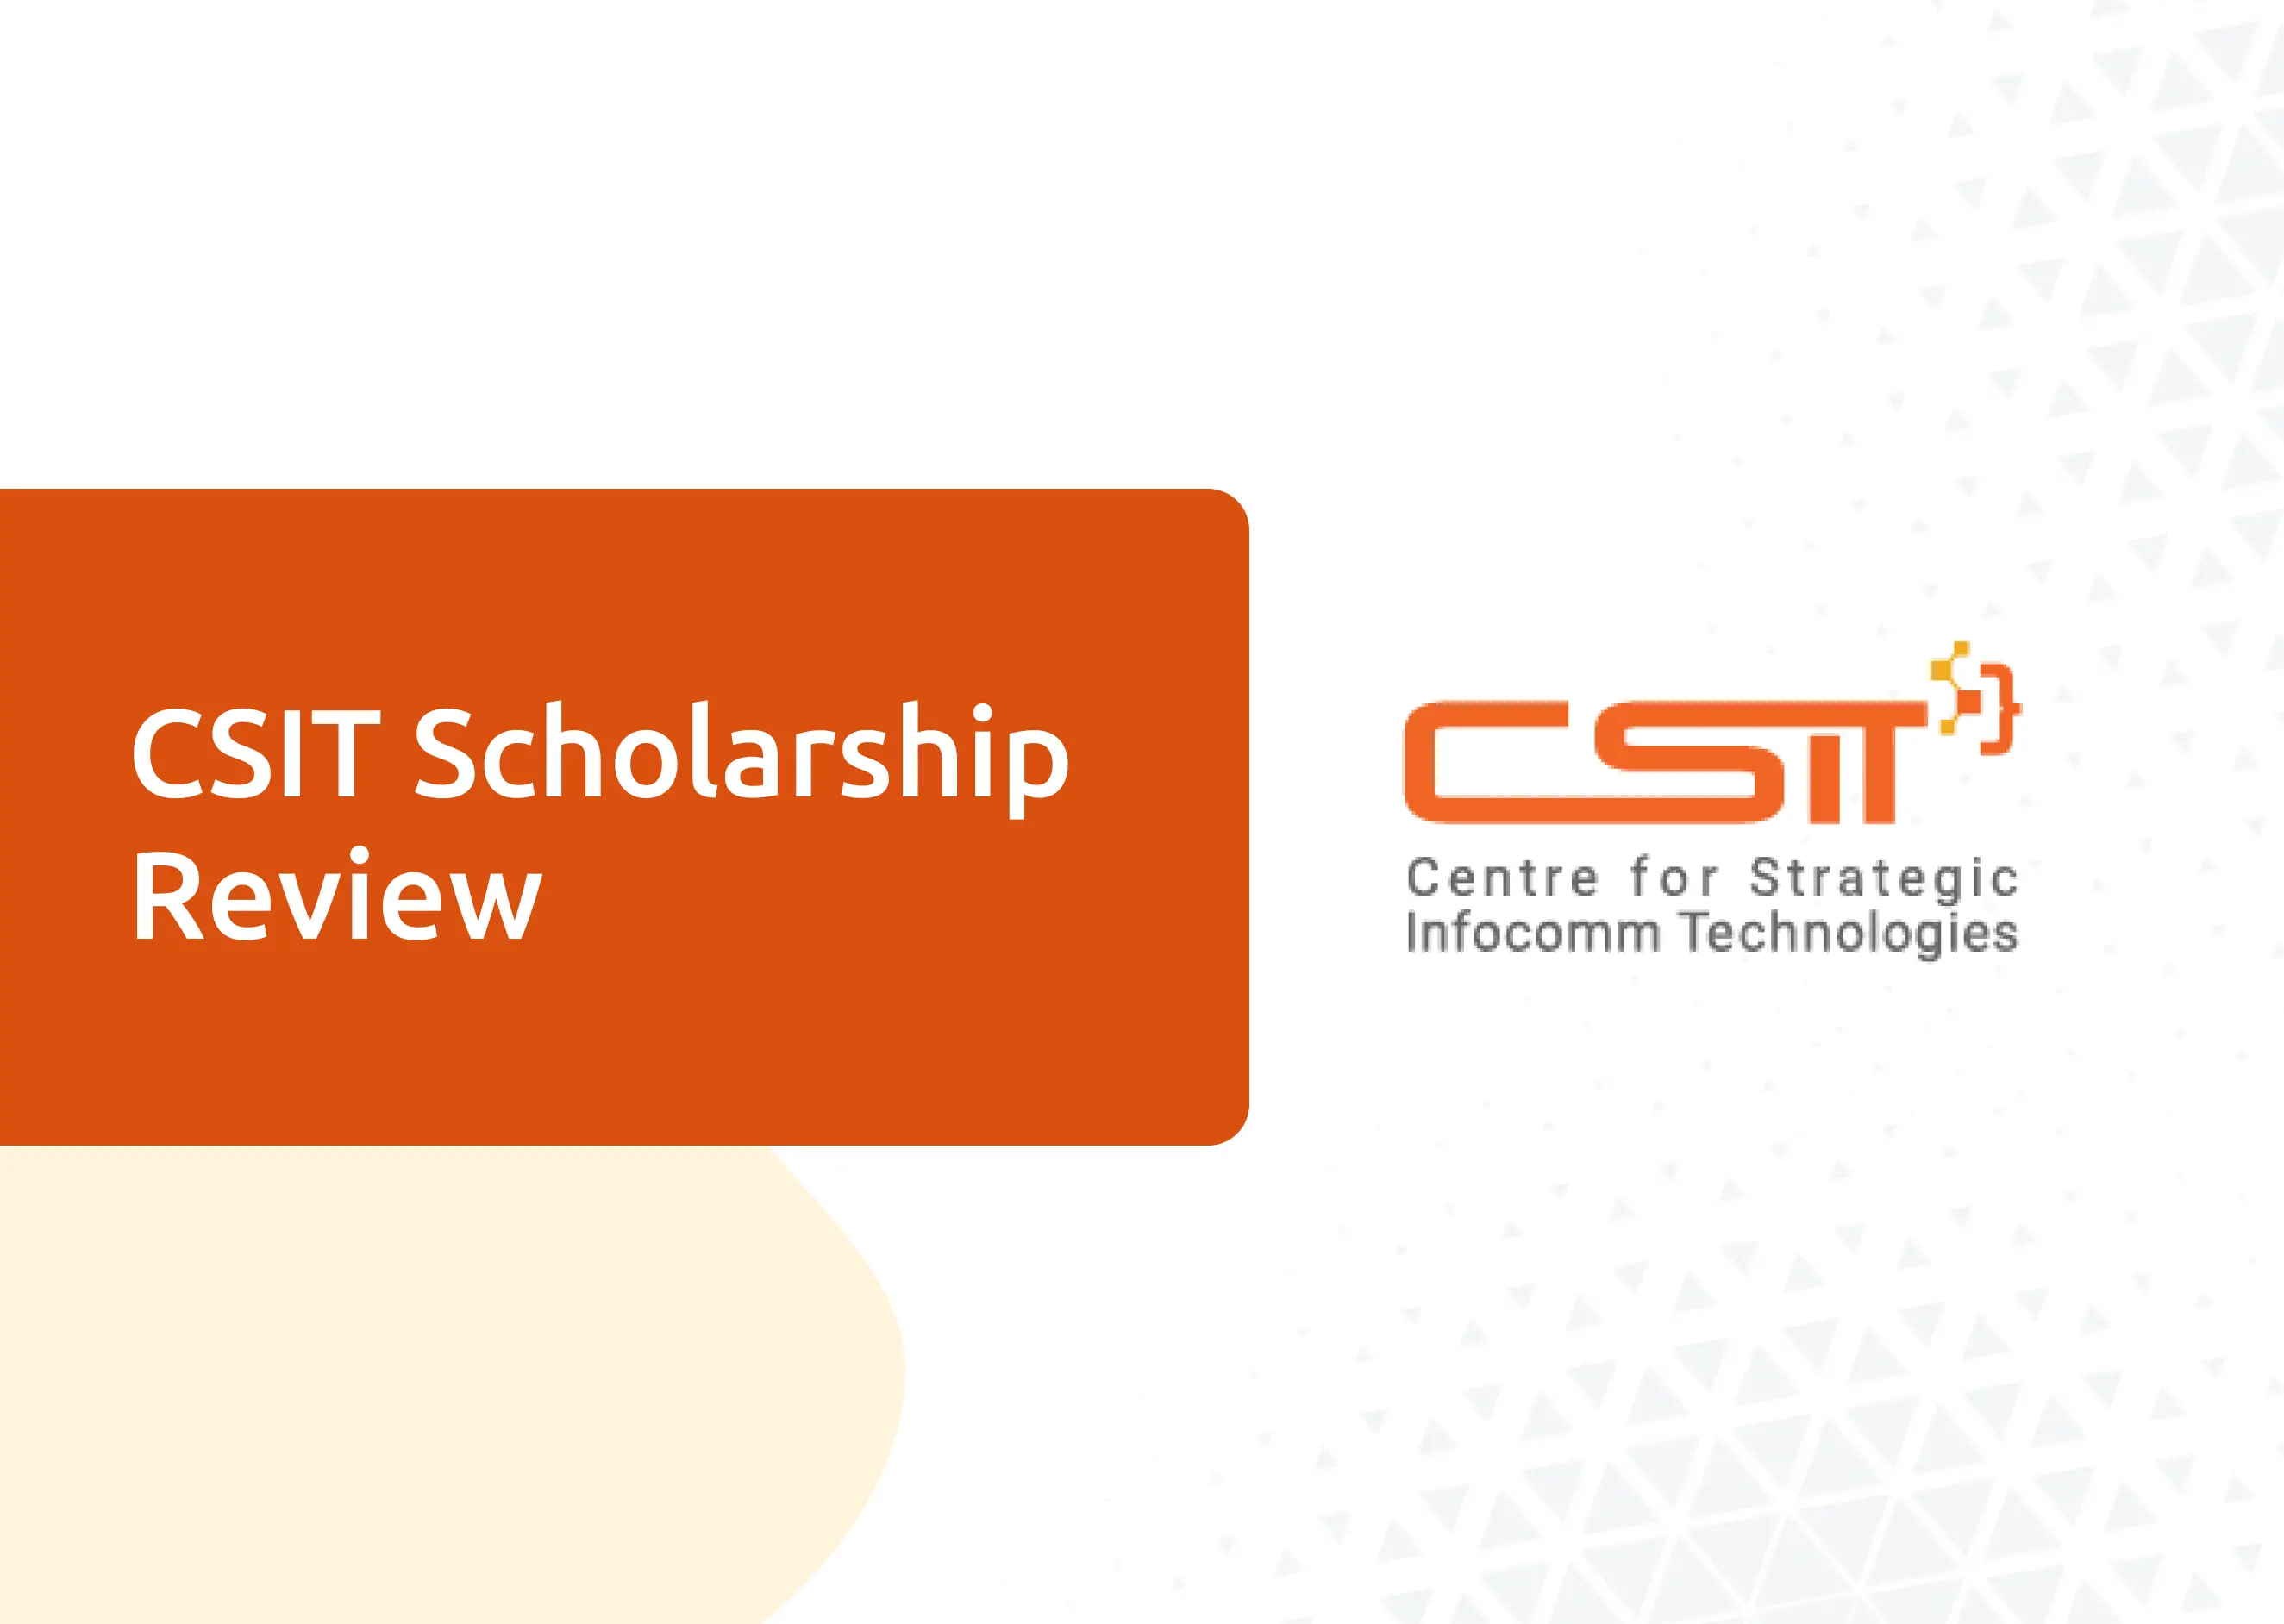 CSIT Scholarship Review